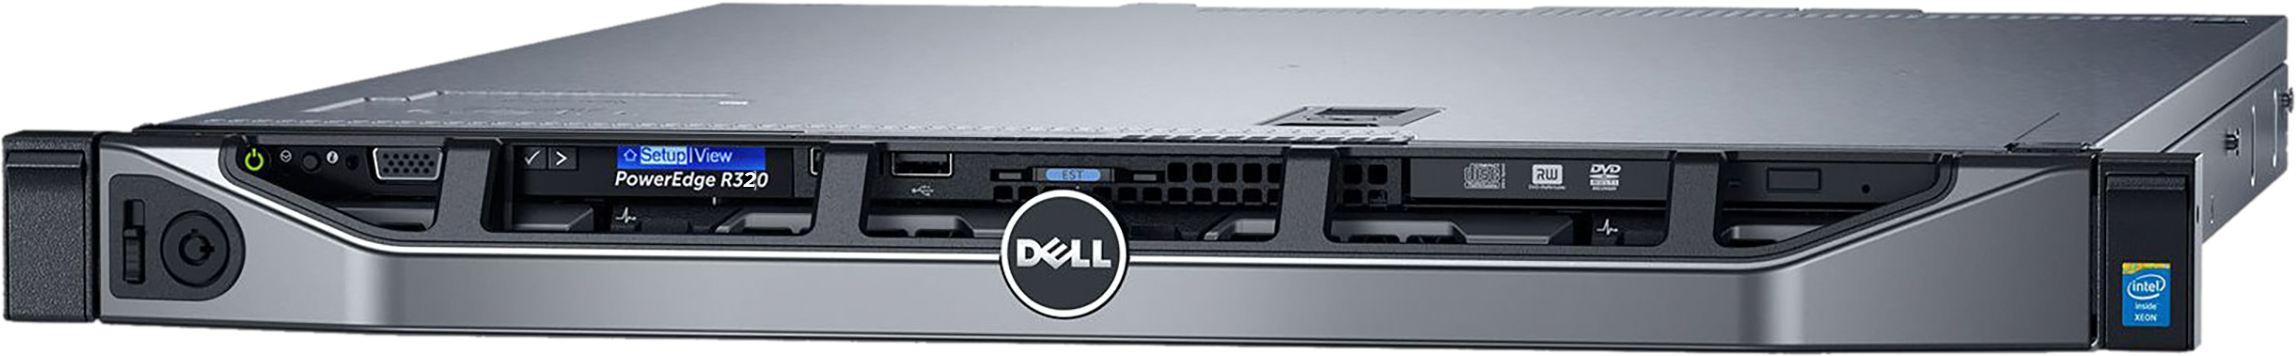 Аренда физического сервера DELL R320 / E5-2420 v2 / 8 GB RAM / 2 × 1 TB HDD / H310